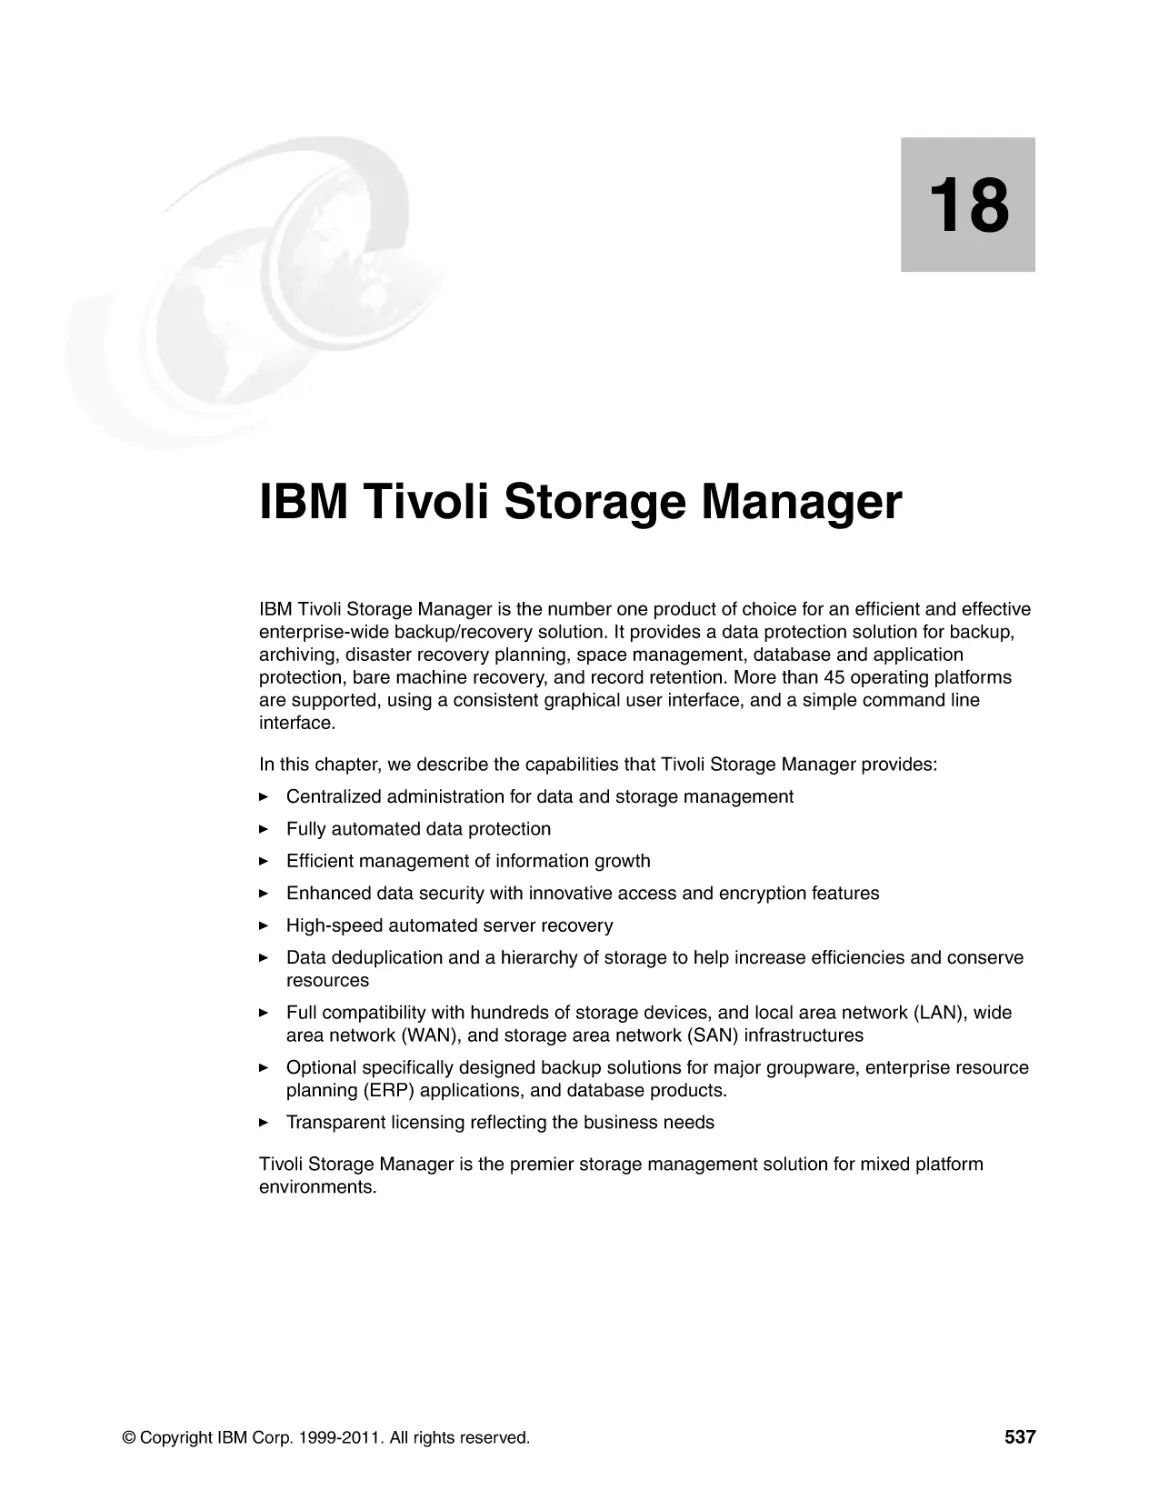 Chapter 18. IBM Tivoli Storage Manager